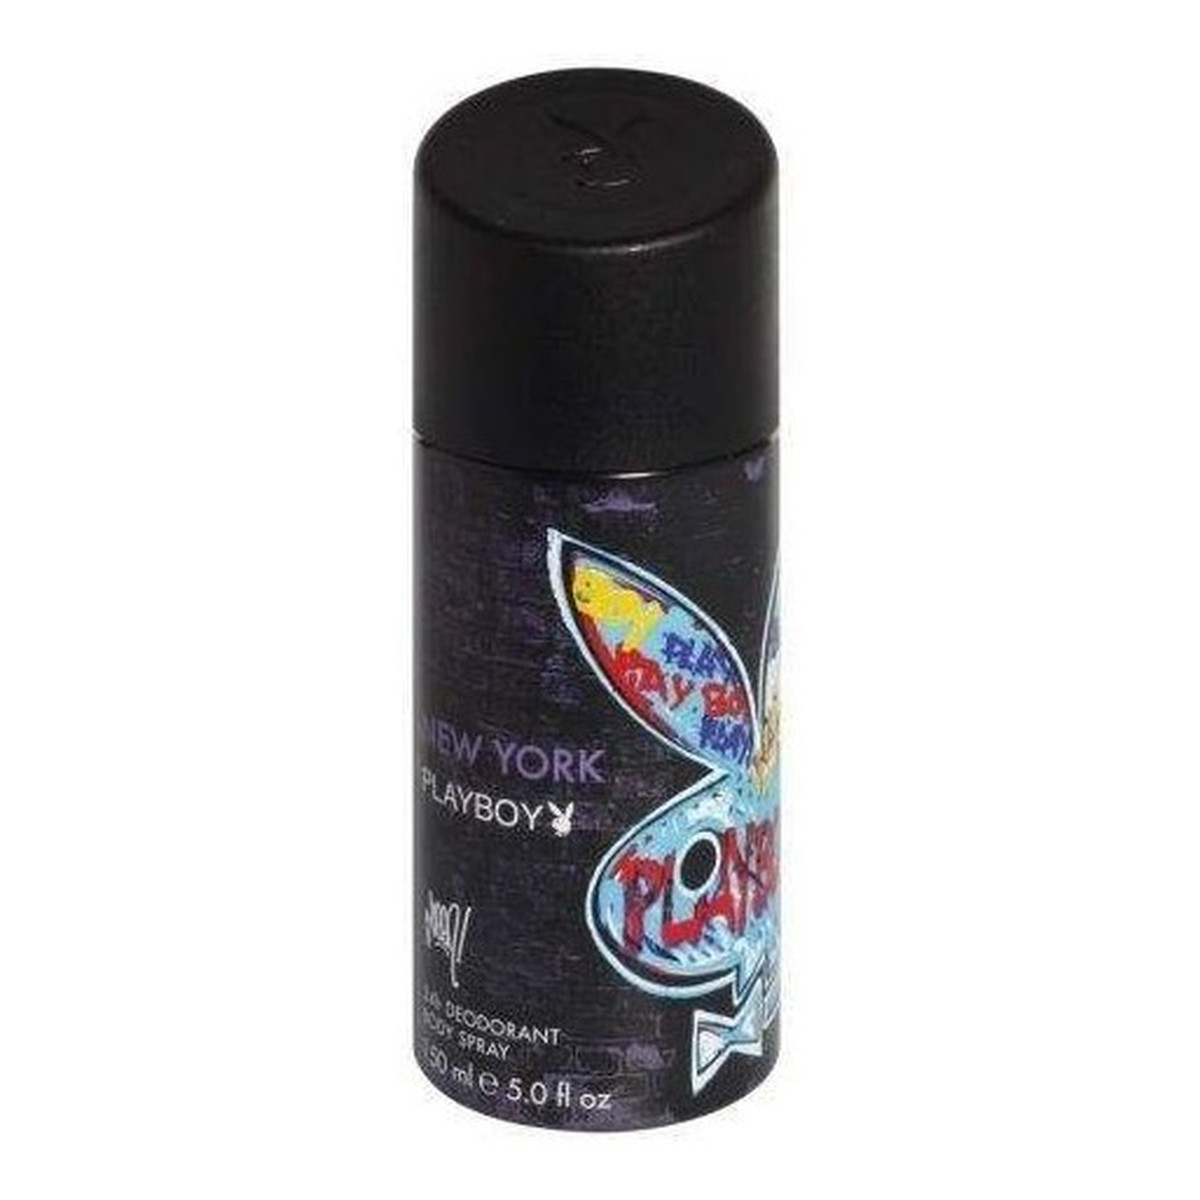 Playboy New York Dezodorant spray 150ml